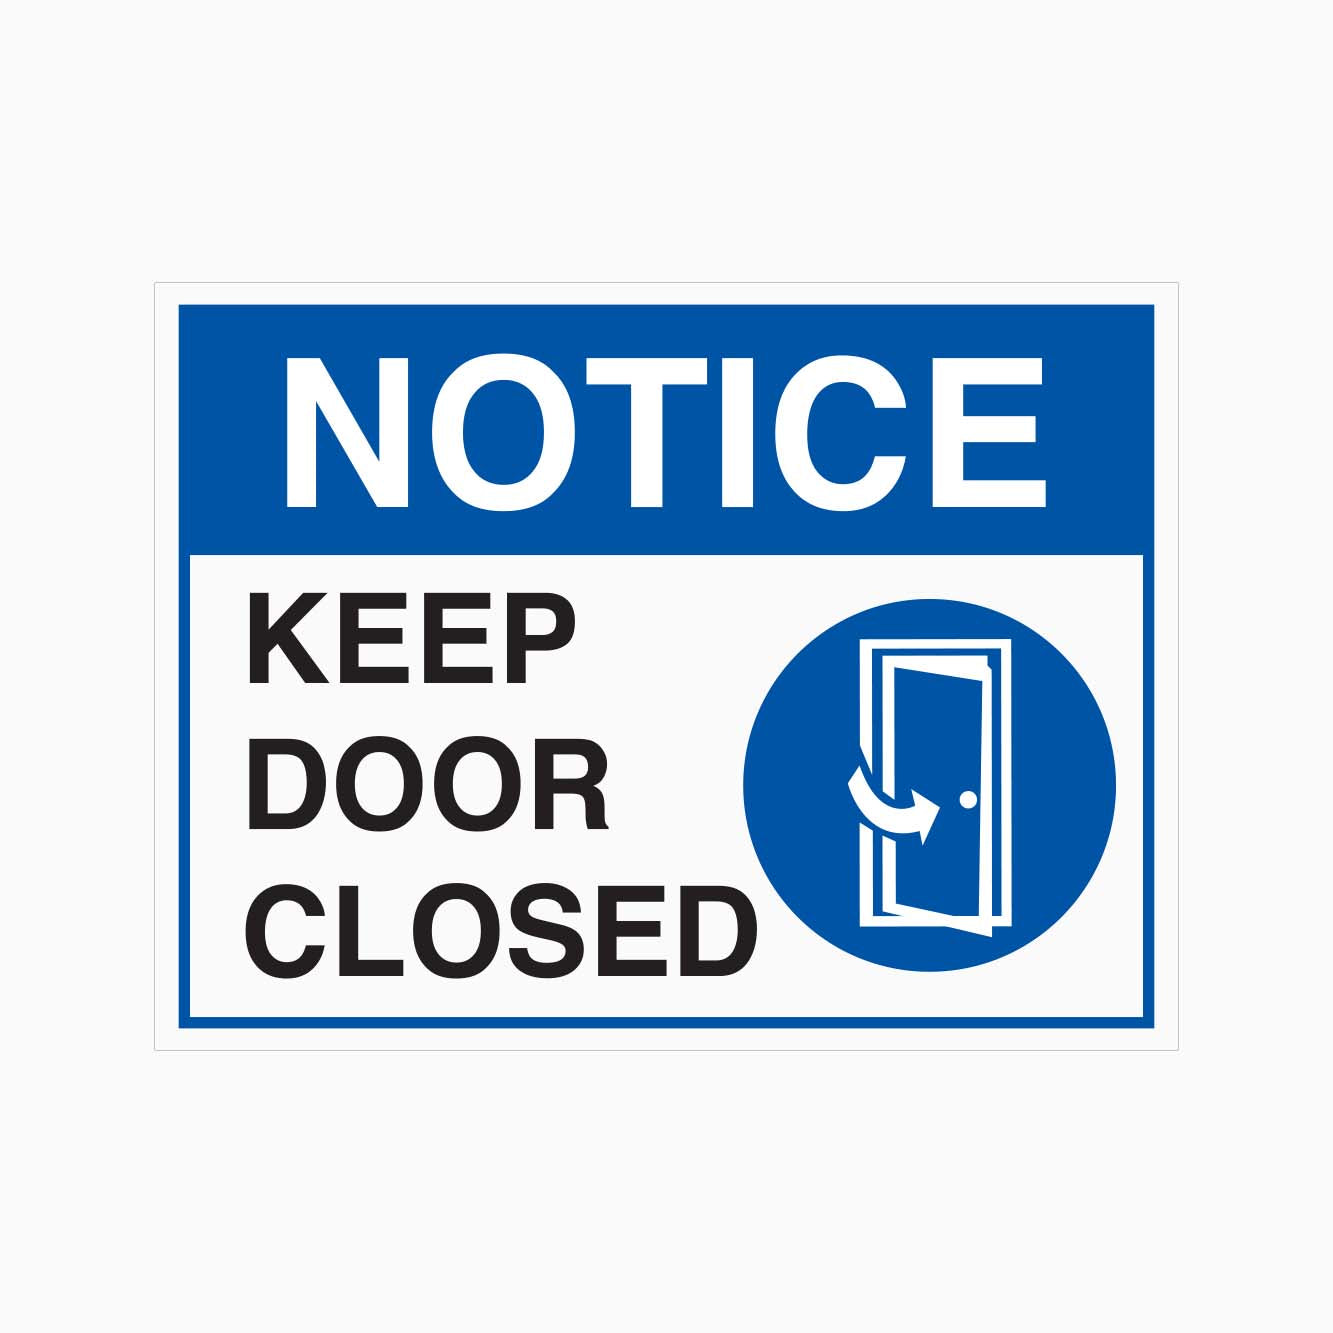 NOTICE KEEP DOOR CLOSED SIGN - GET SIGNS